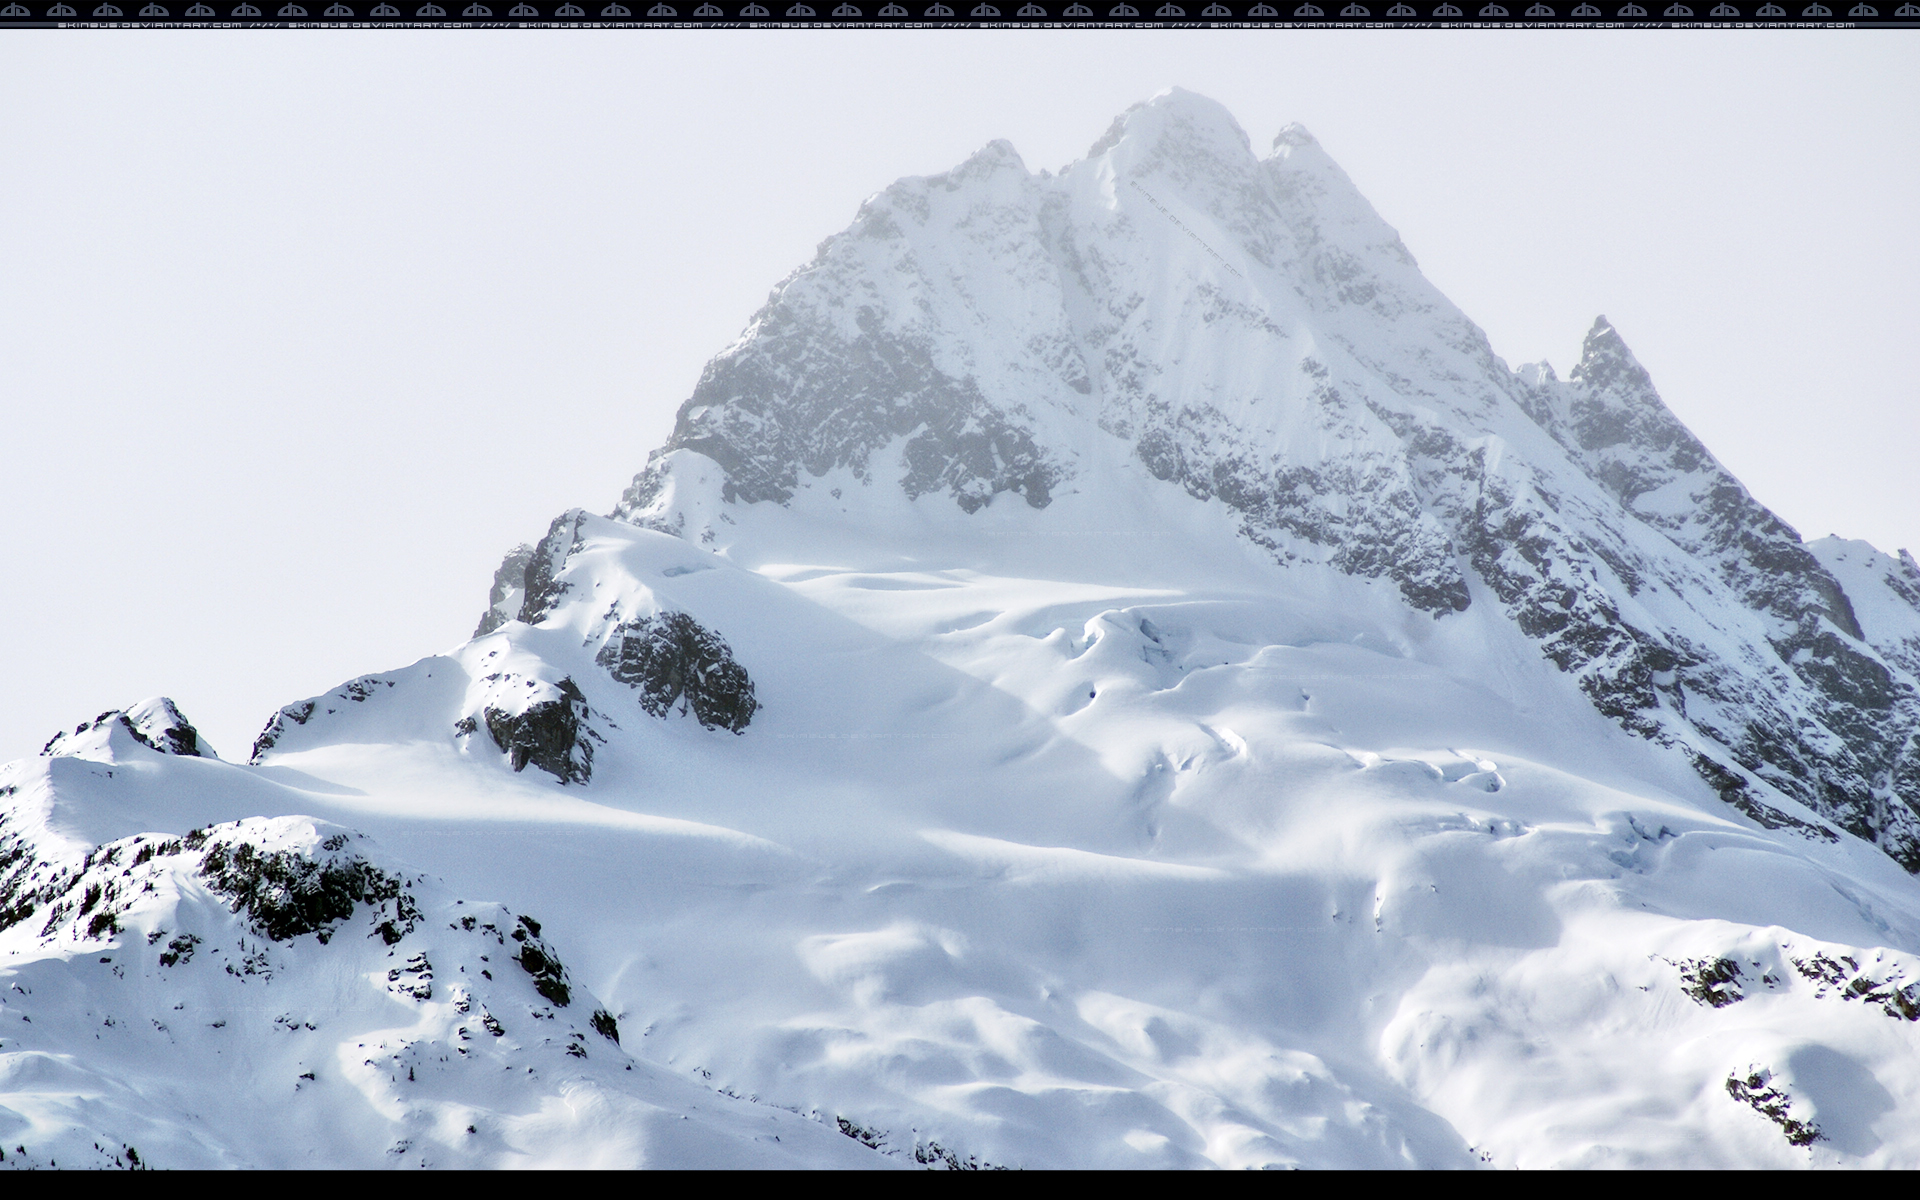 Snow Covered Mountain Peaks by SKiNBuS on DeviantArt